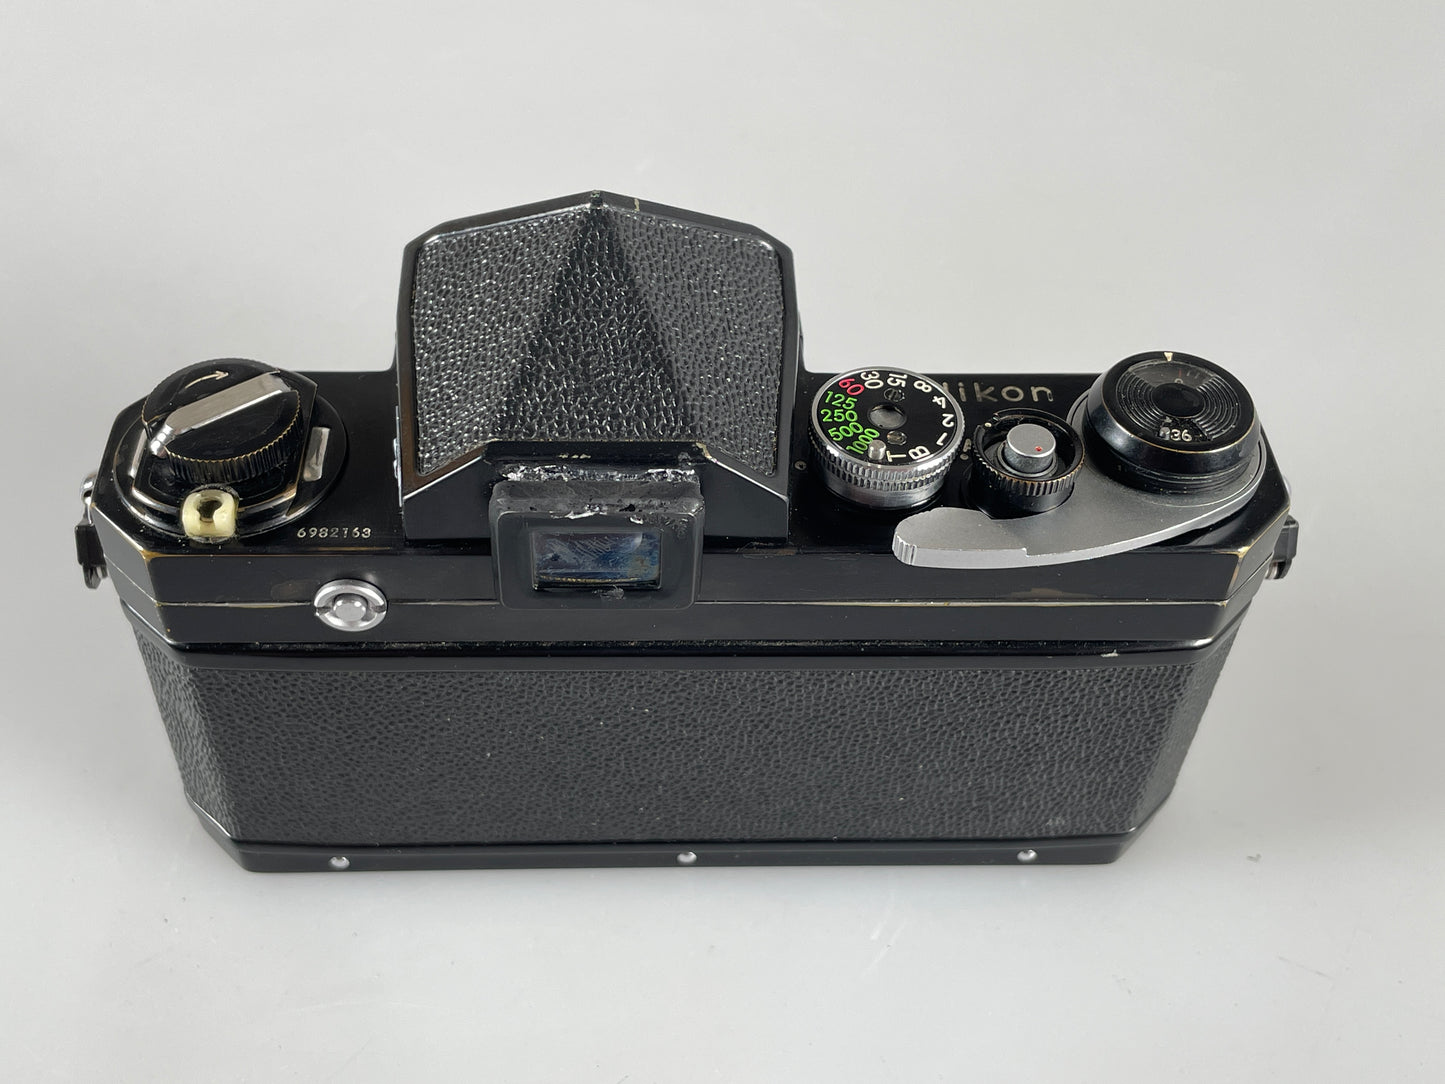 Nikon F Black body prism eye level finder 35mm film camera